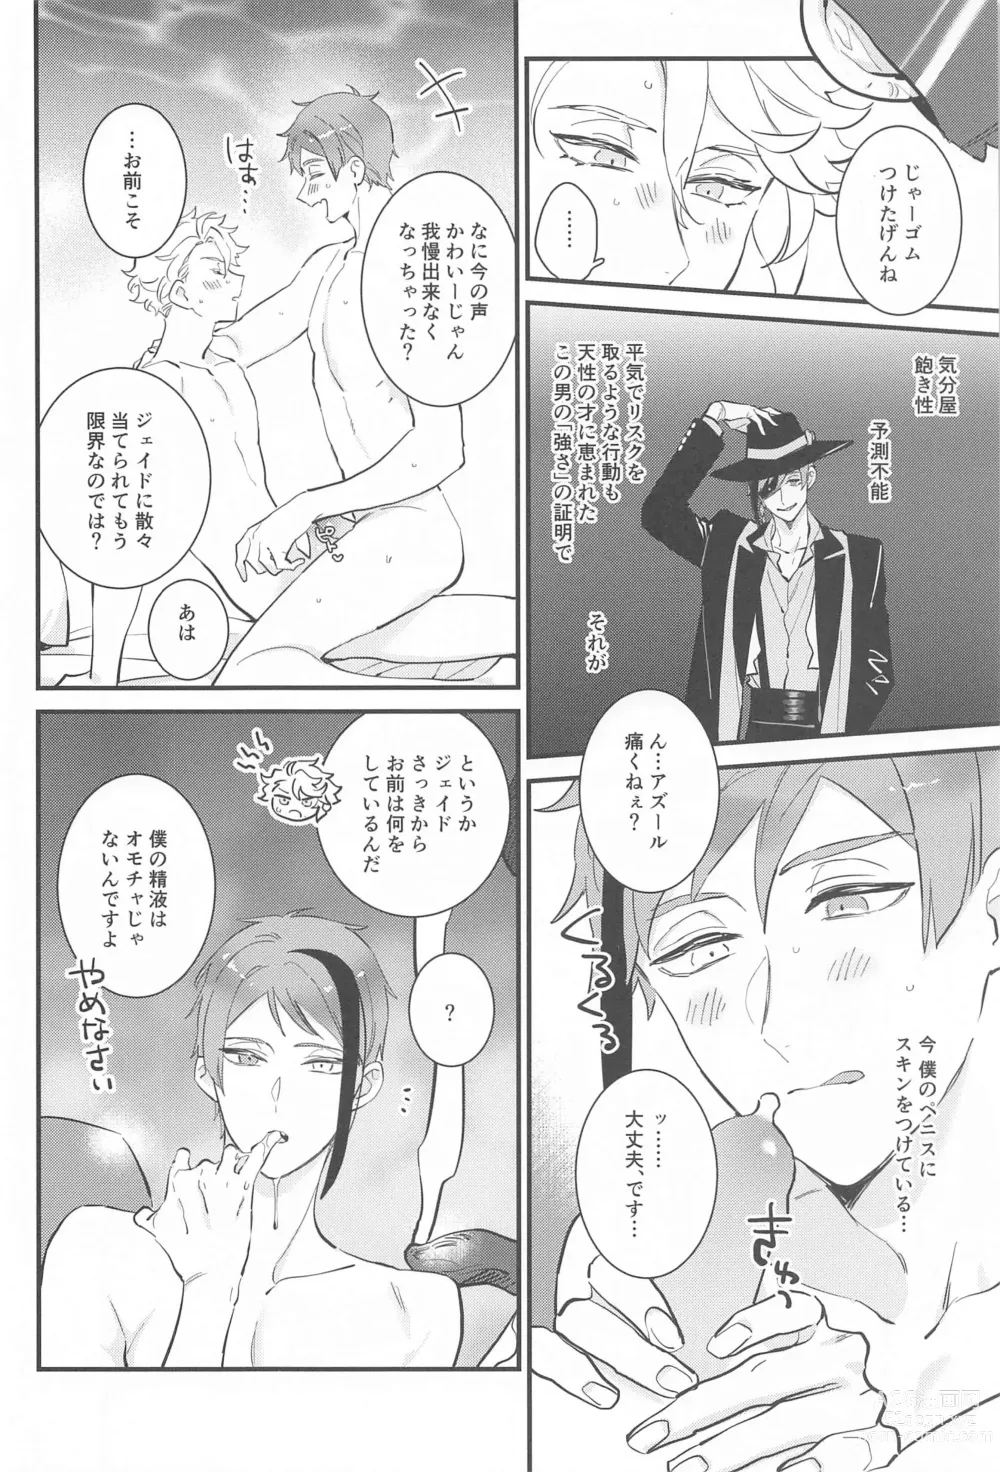 Page 5 of doujinshi Yofukashi Parade